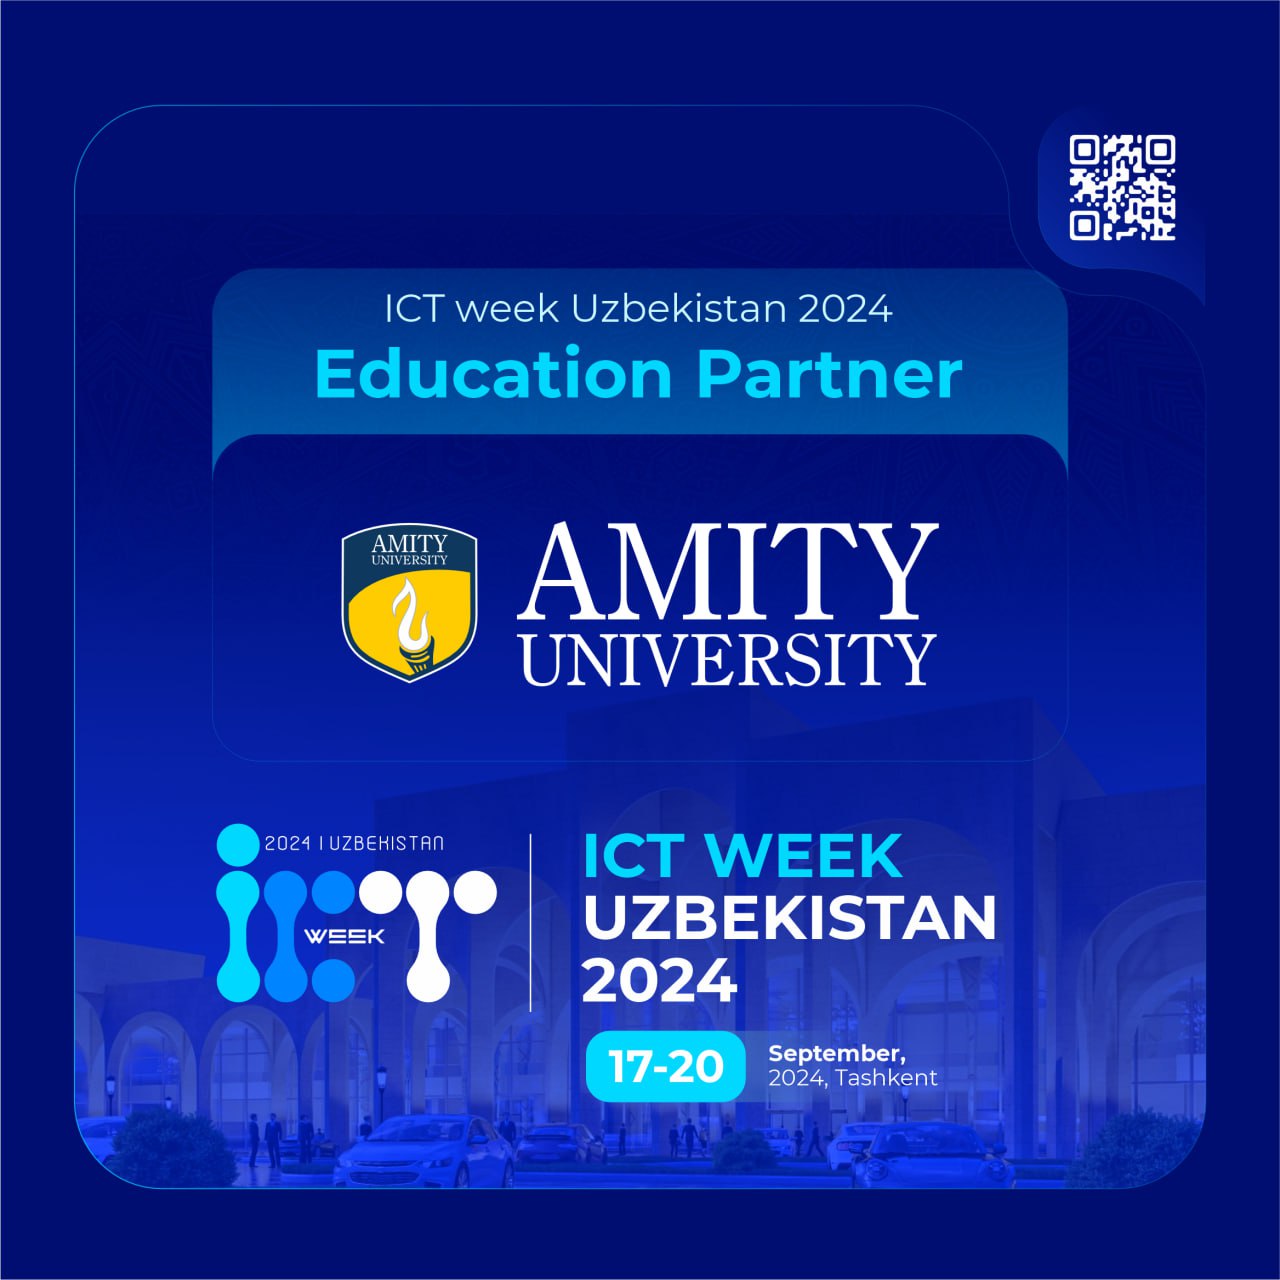 Amity University - Education Partner of ICTWEEK UZBEKISTAN 2024!